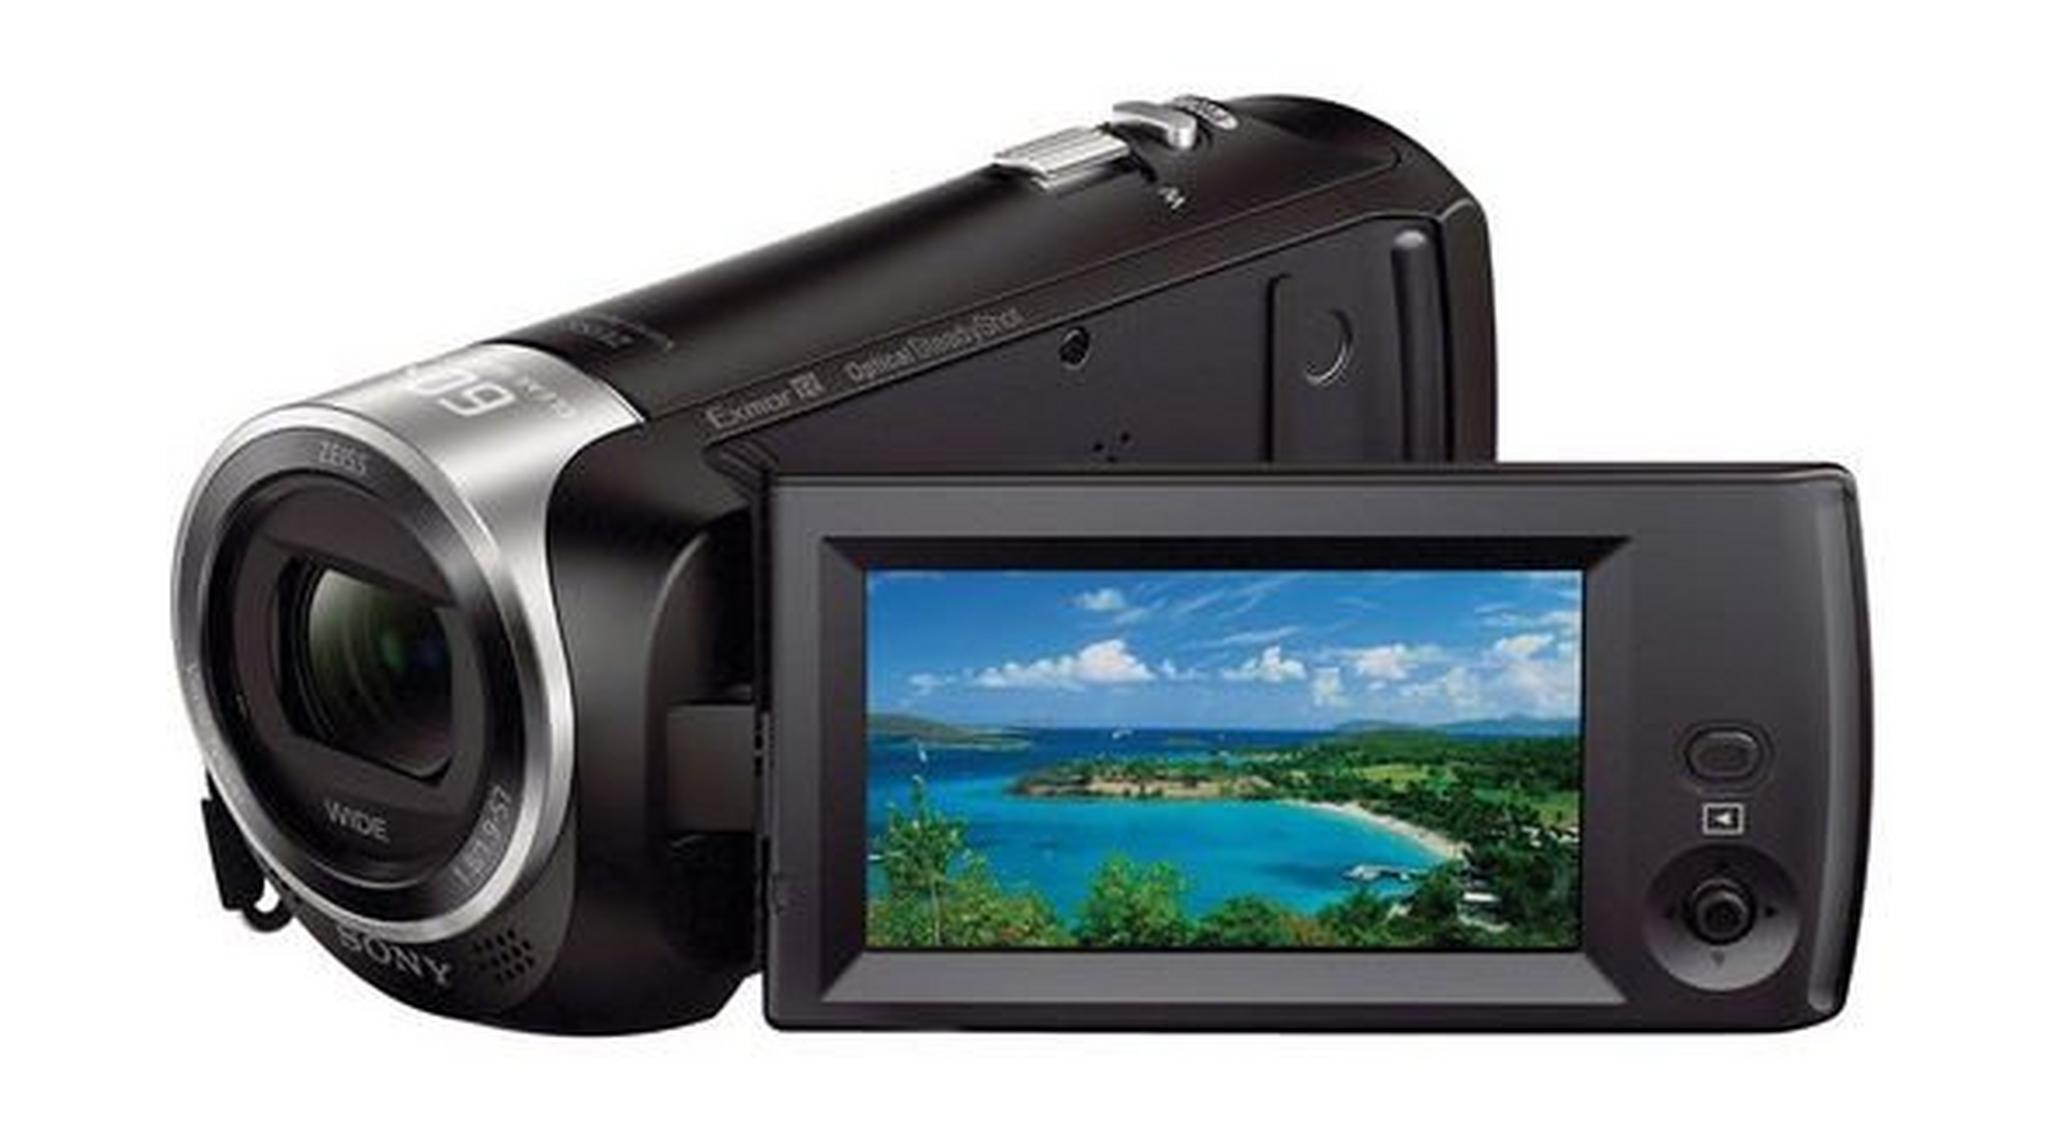 Sony HDR-CX405E HD Handycam